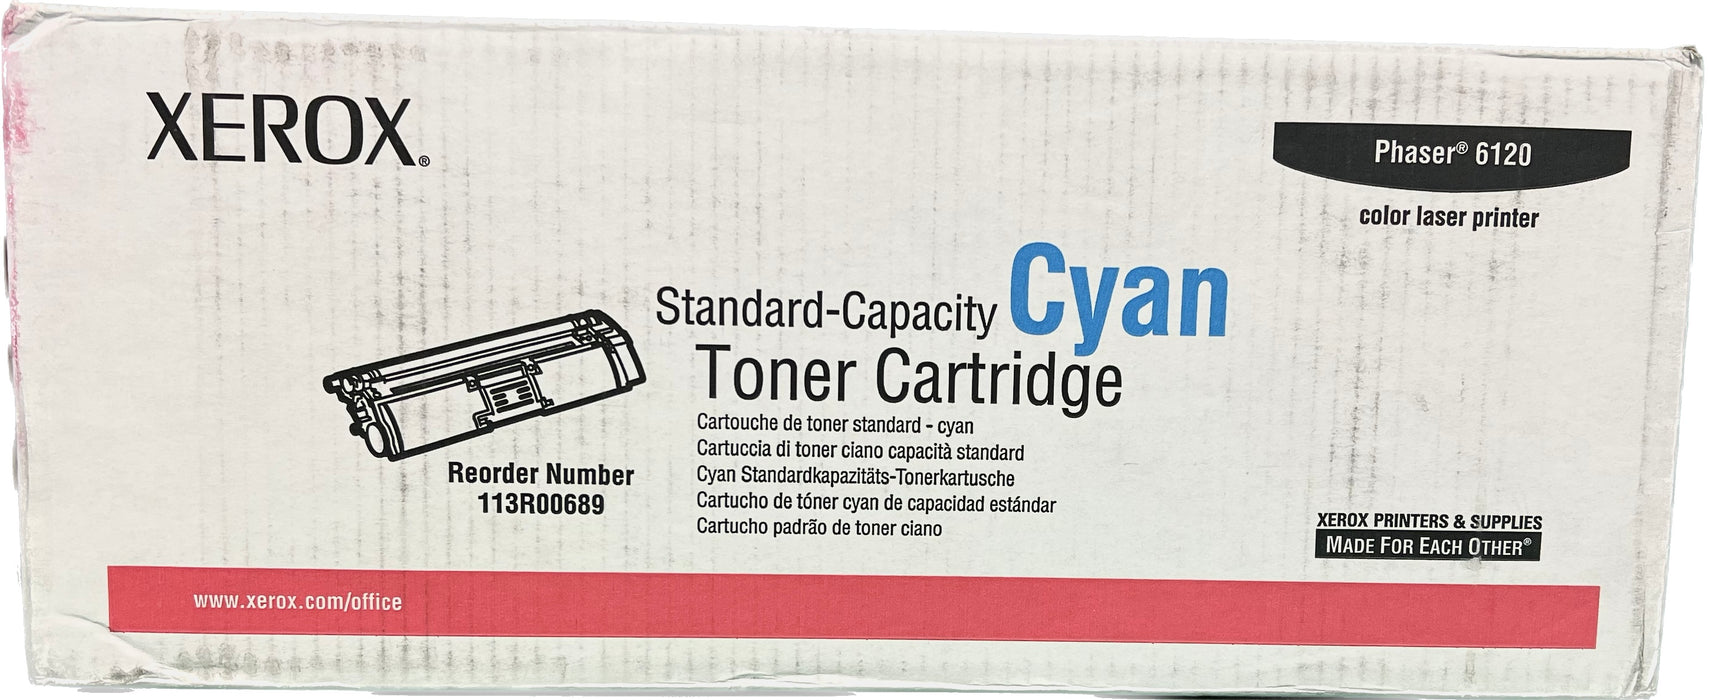 Genuine Xerox Cyan Standard Capacity Toner Cartridge | OEM 113R00689 | Phaser 6120